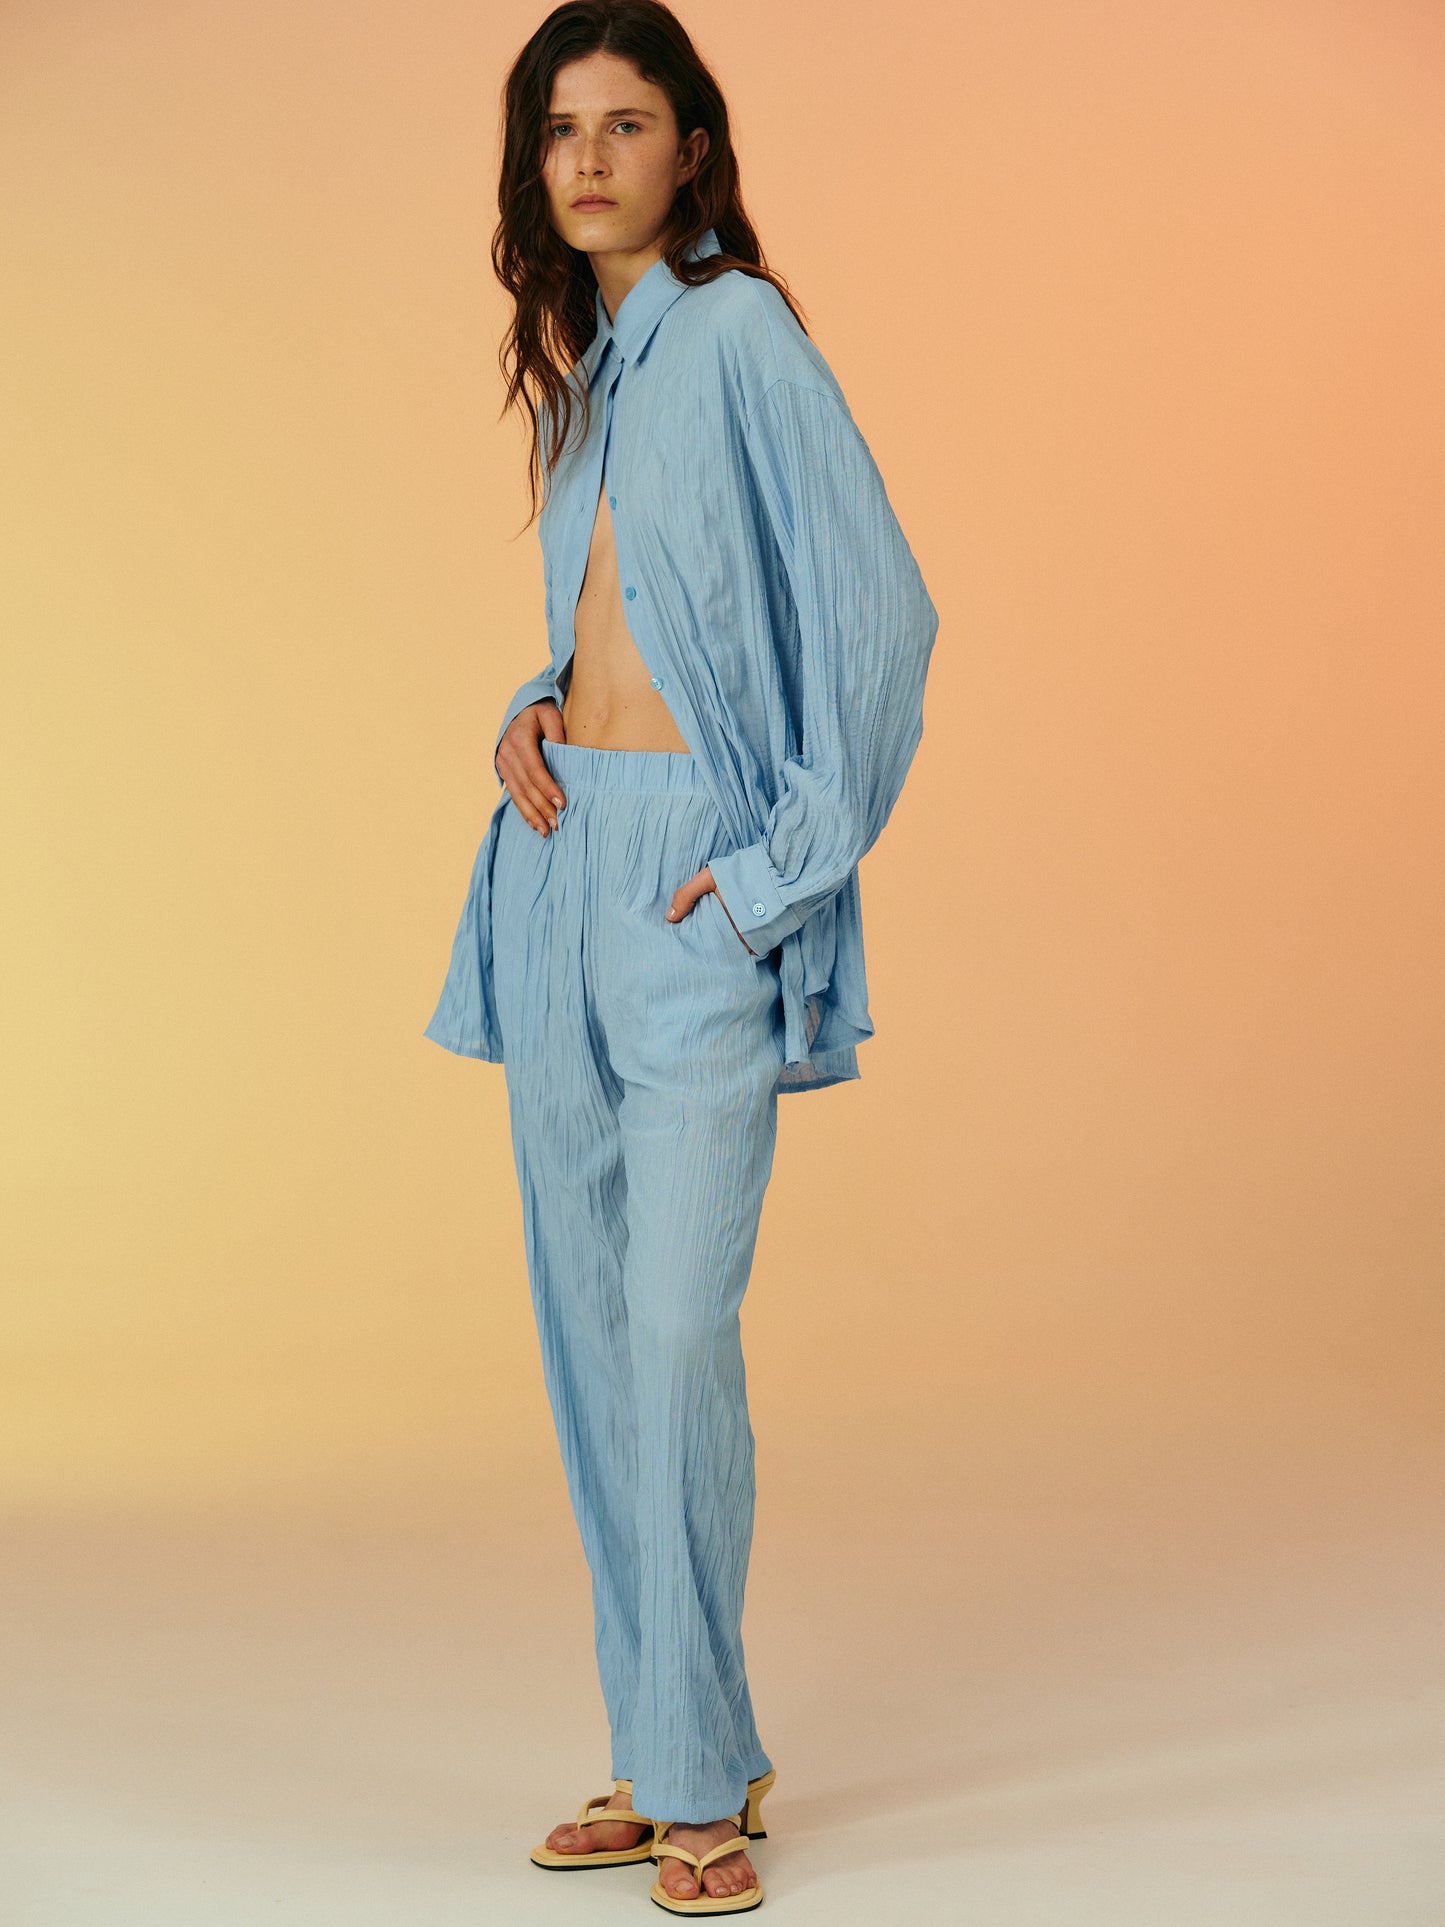 Crinkled Garment-Pleated Pants, Sky Blue